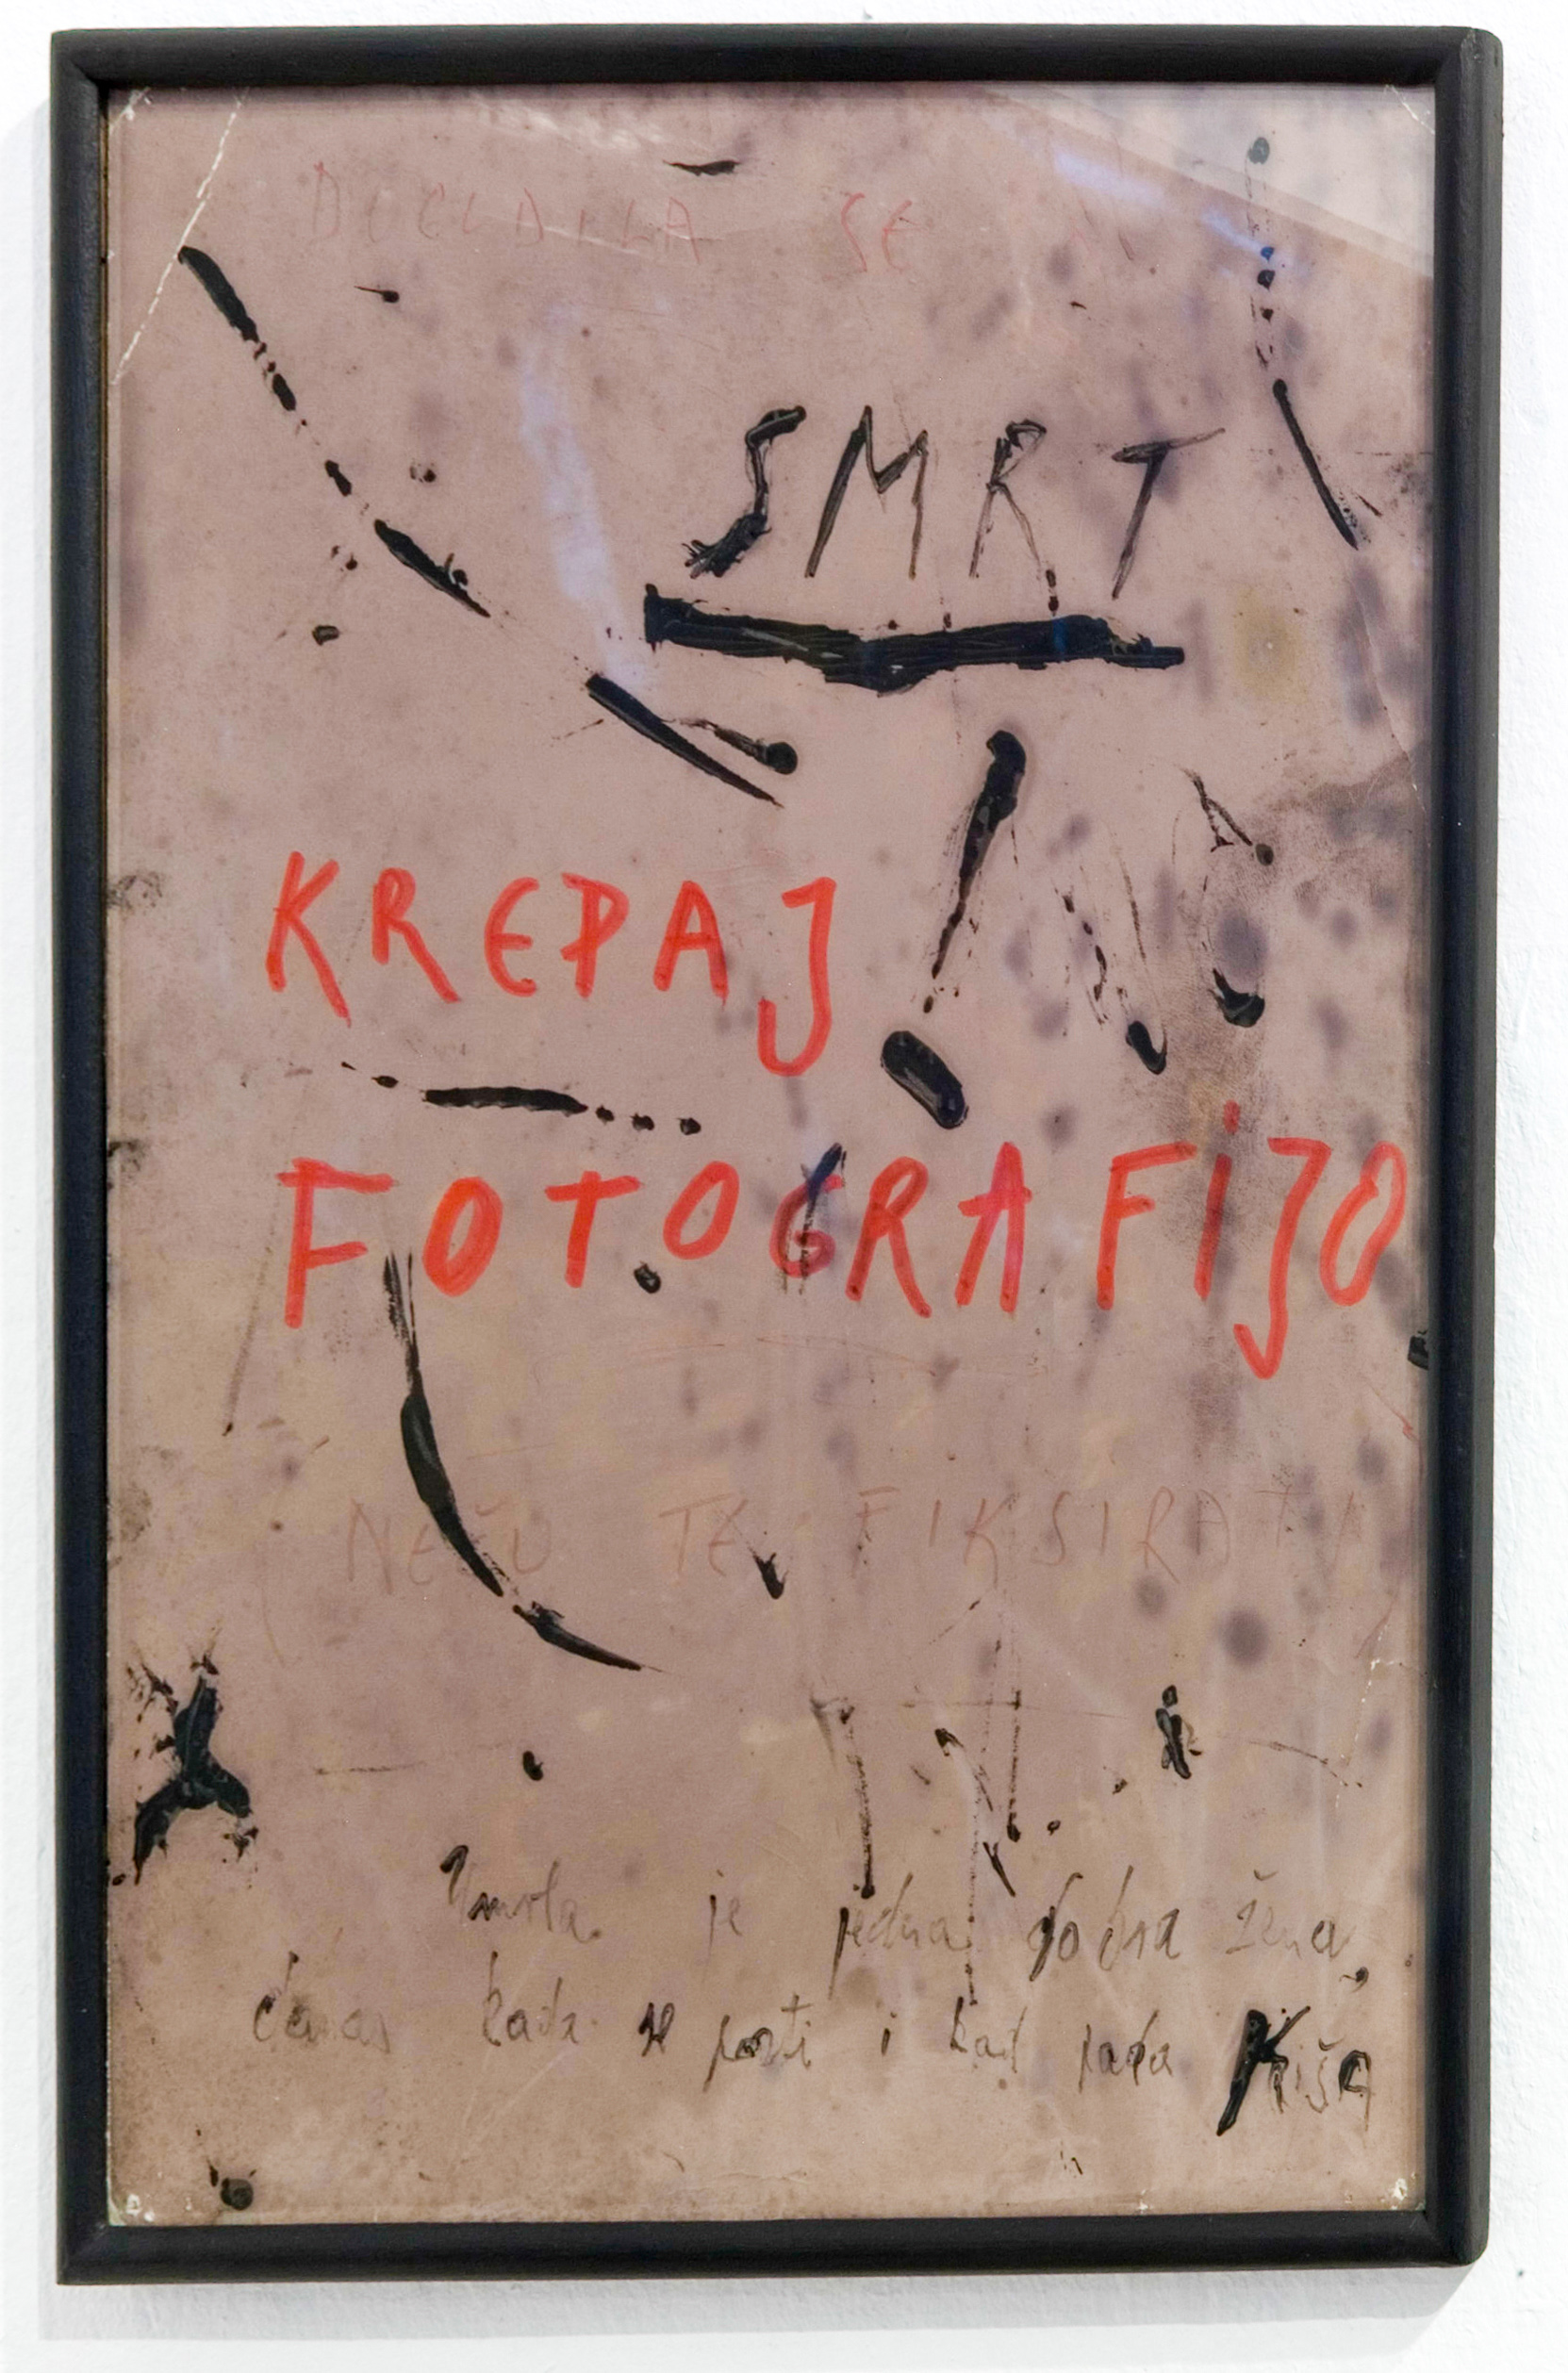 DROP DEAD PHOTOGRAPH (1973) photographic paper, tempera, marker